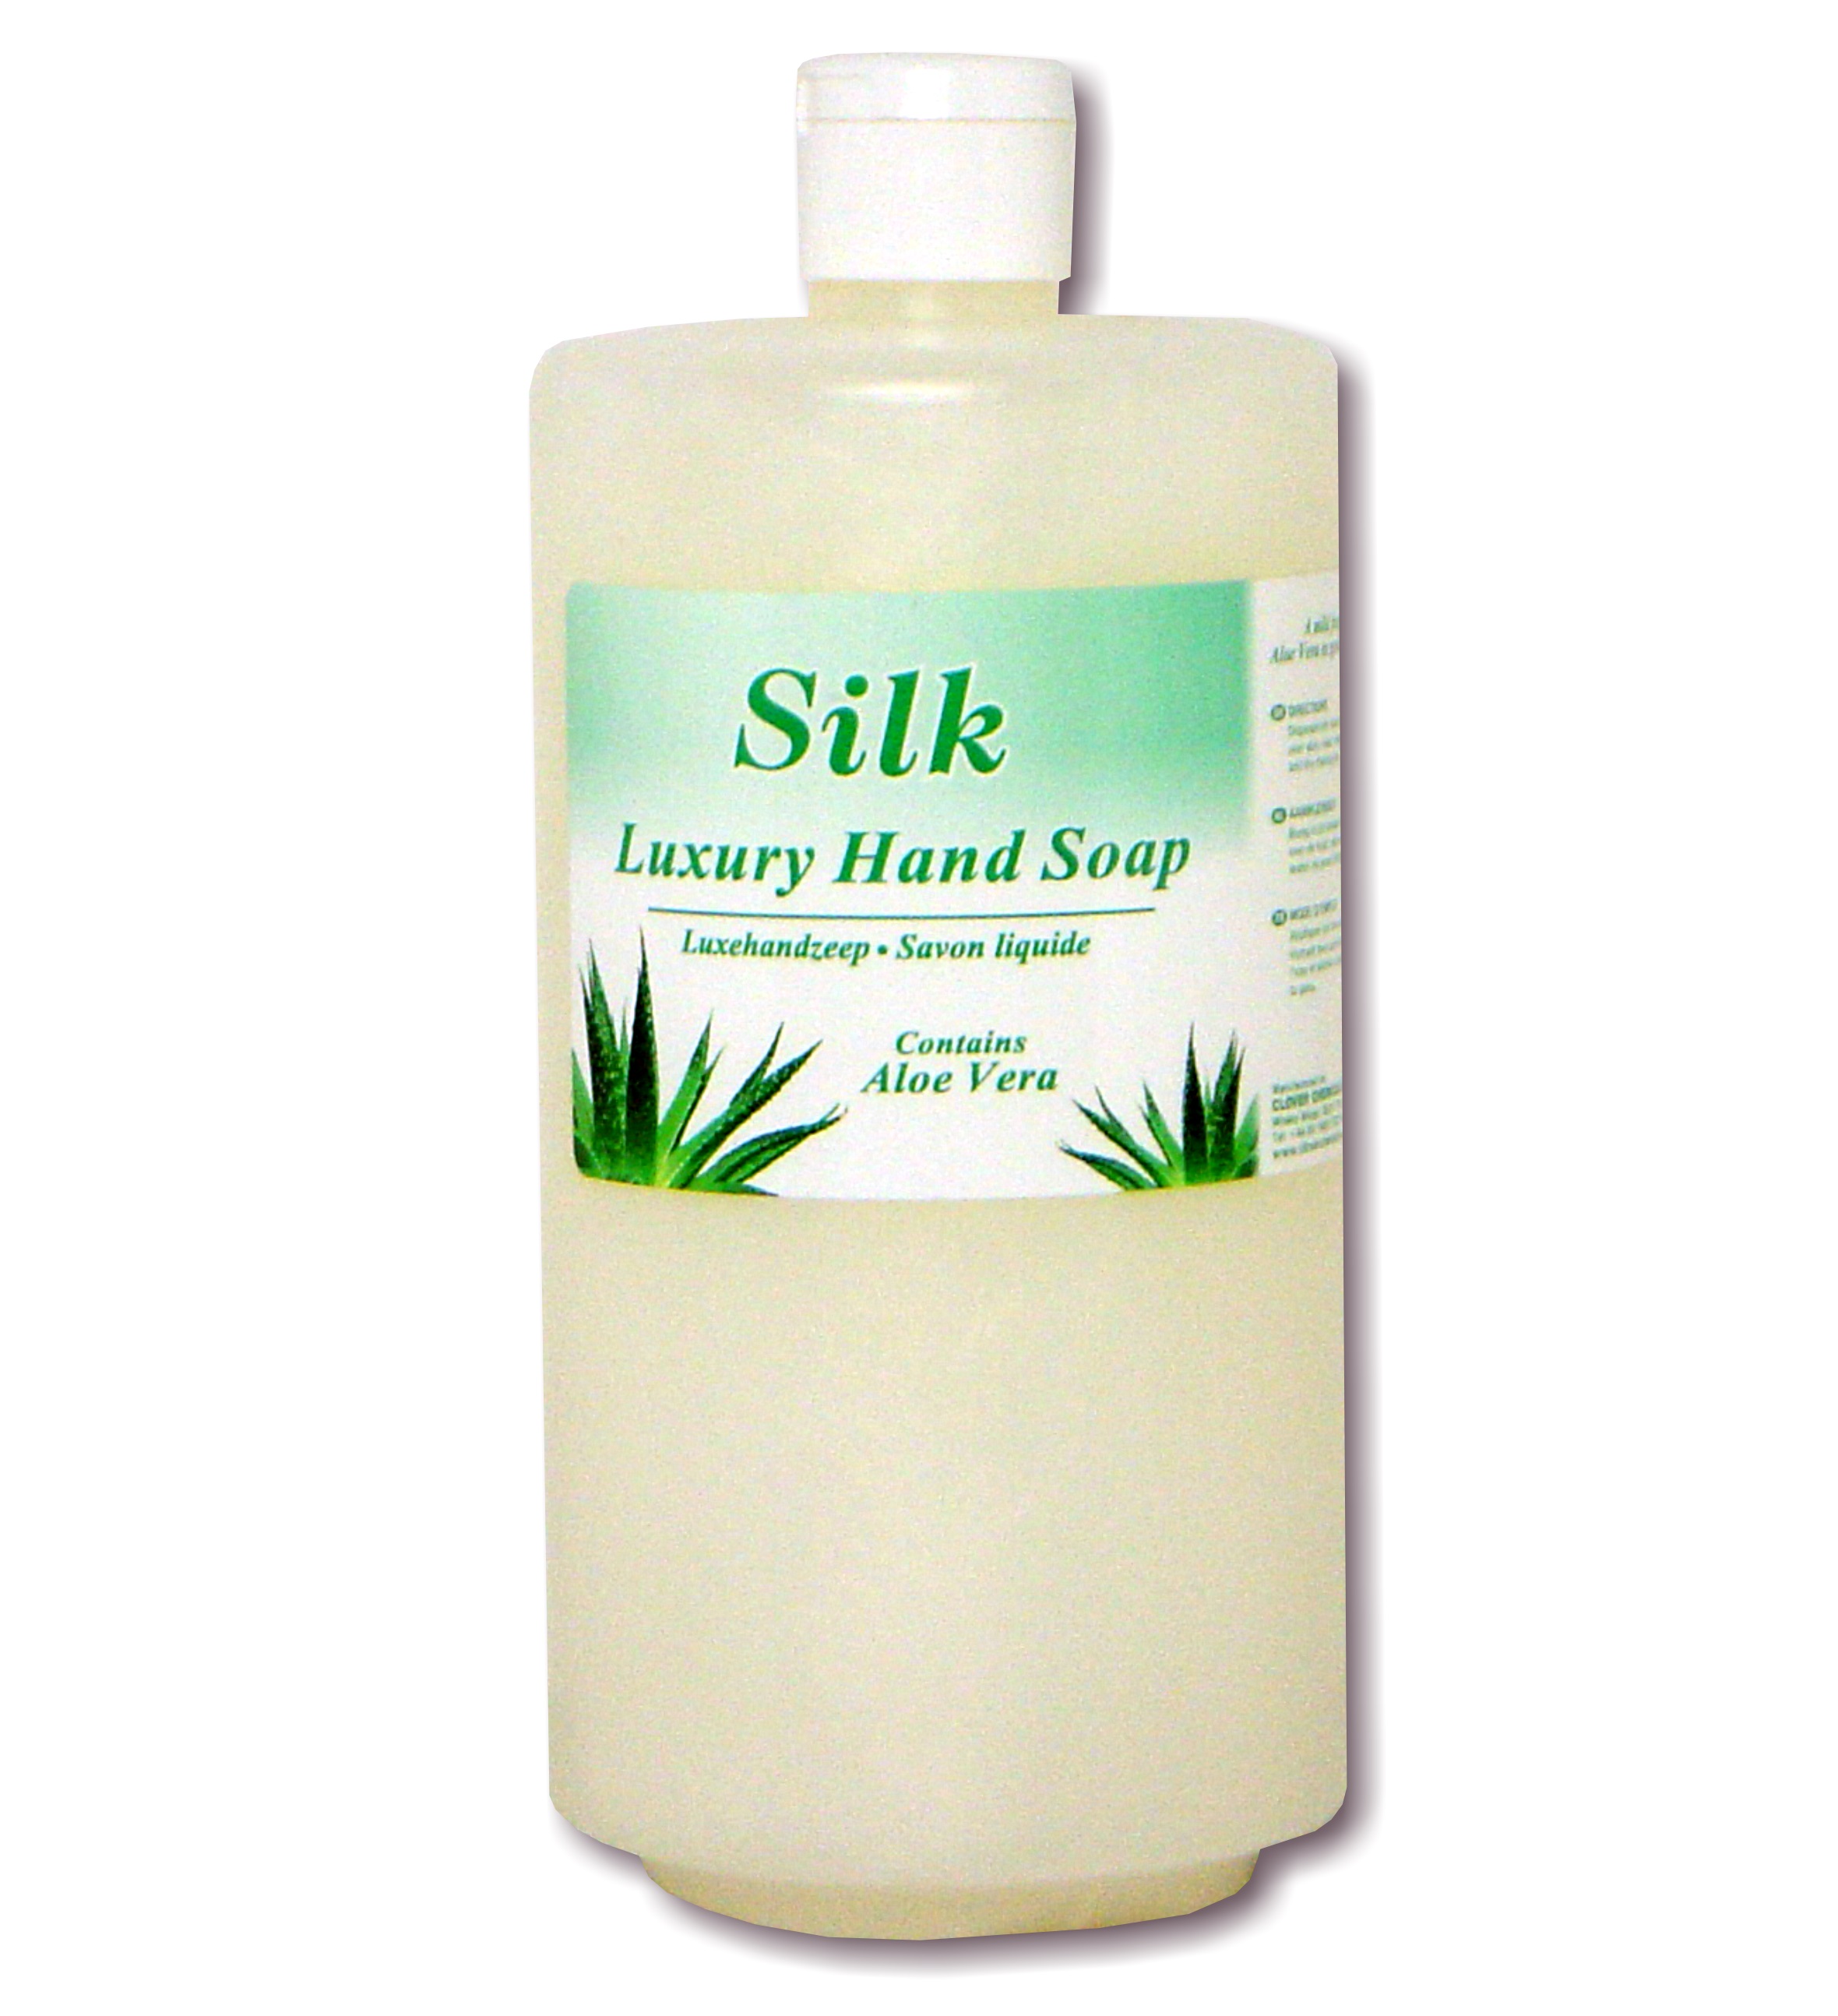 SILK-Luxury-Hand-Soap-with-Aloe-Vera-8x750ml--case-